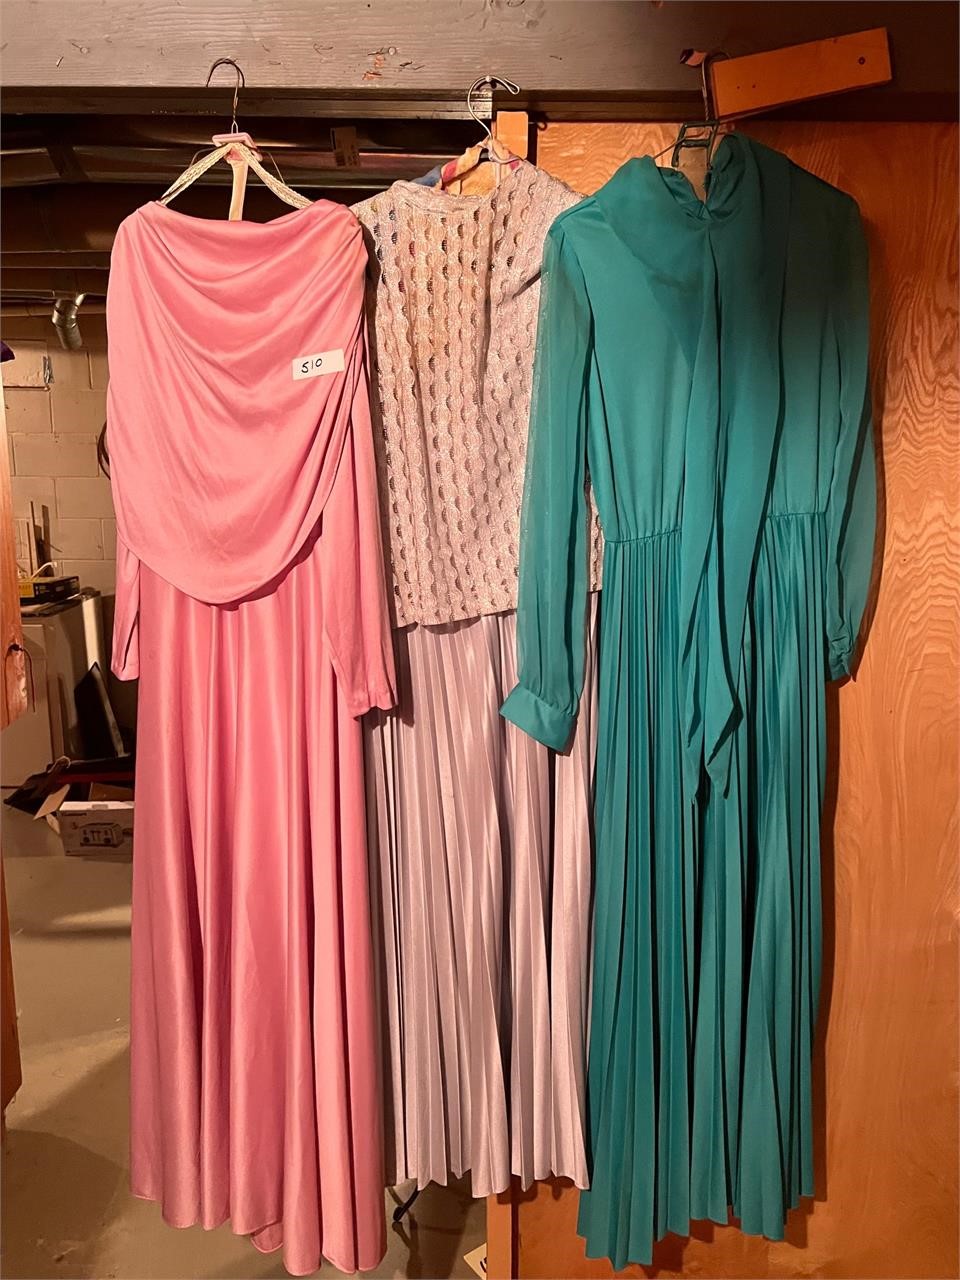 Three lady dresses